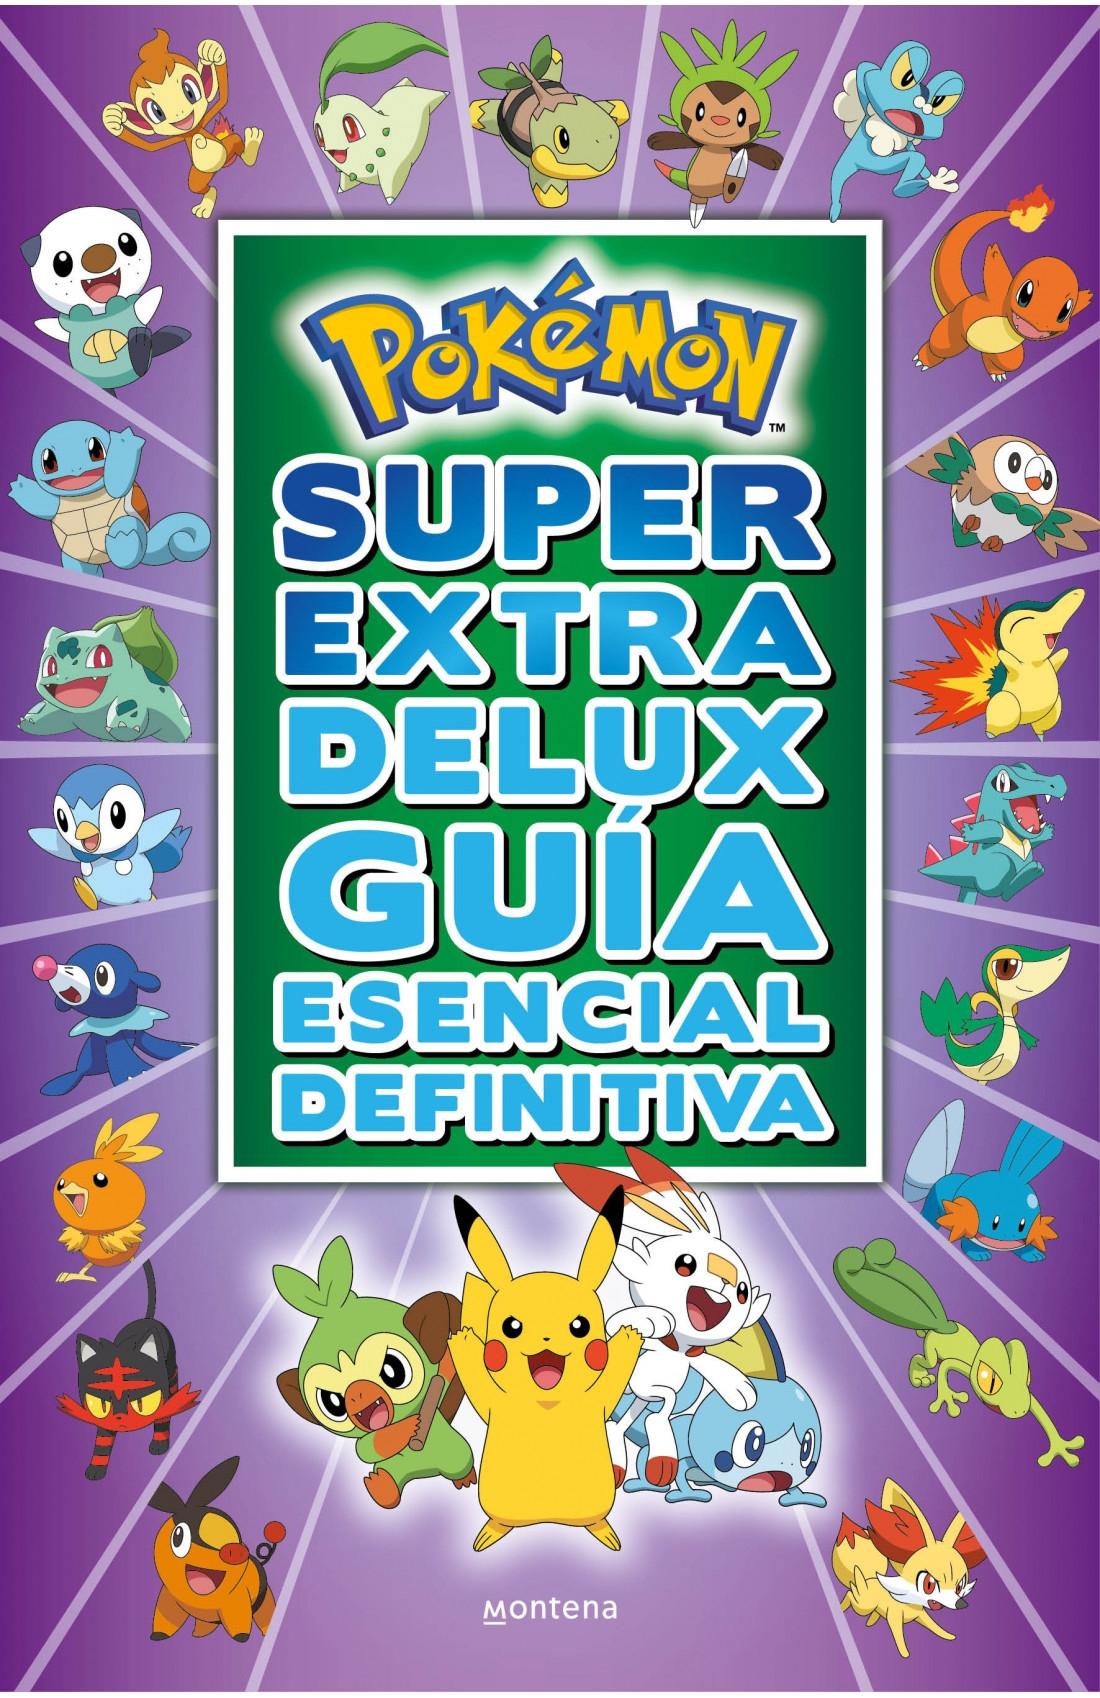 Pokémon Súper Extra Delux Guía Esencial Definitiva. 